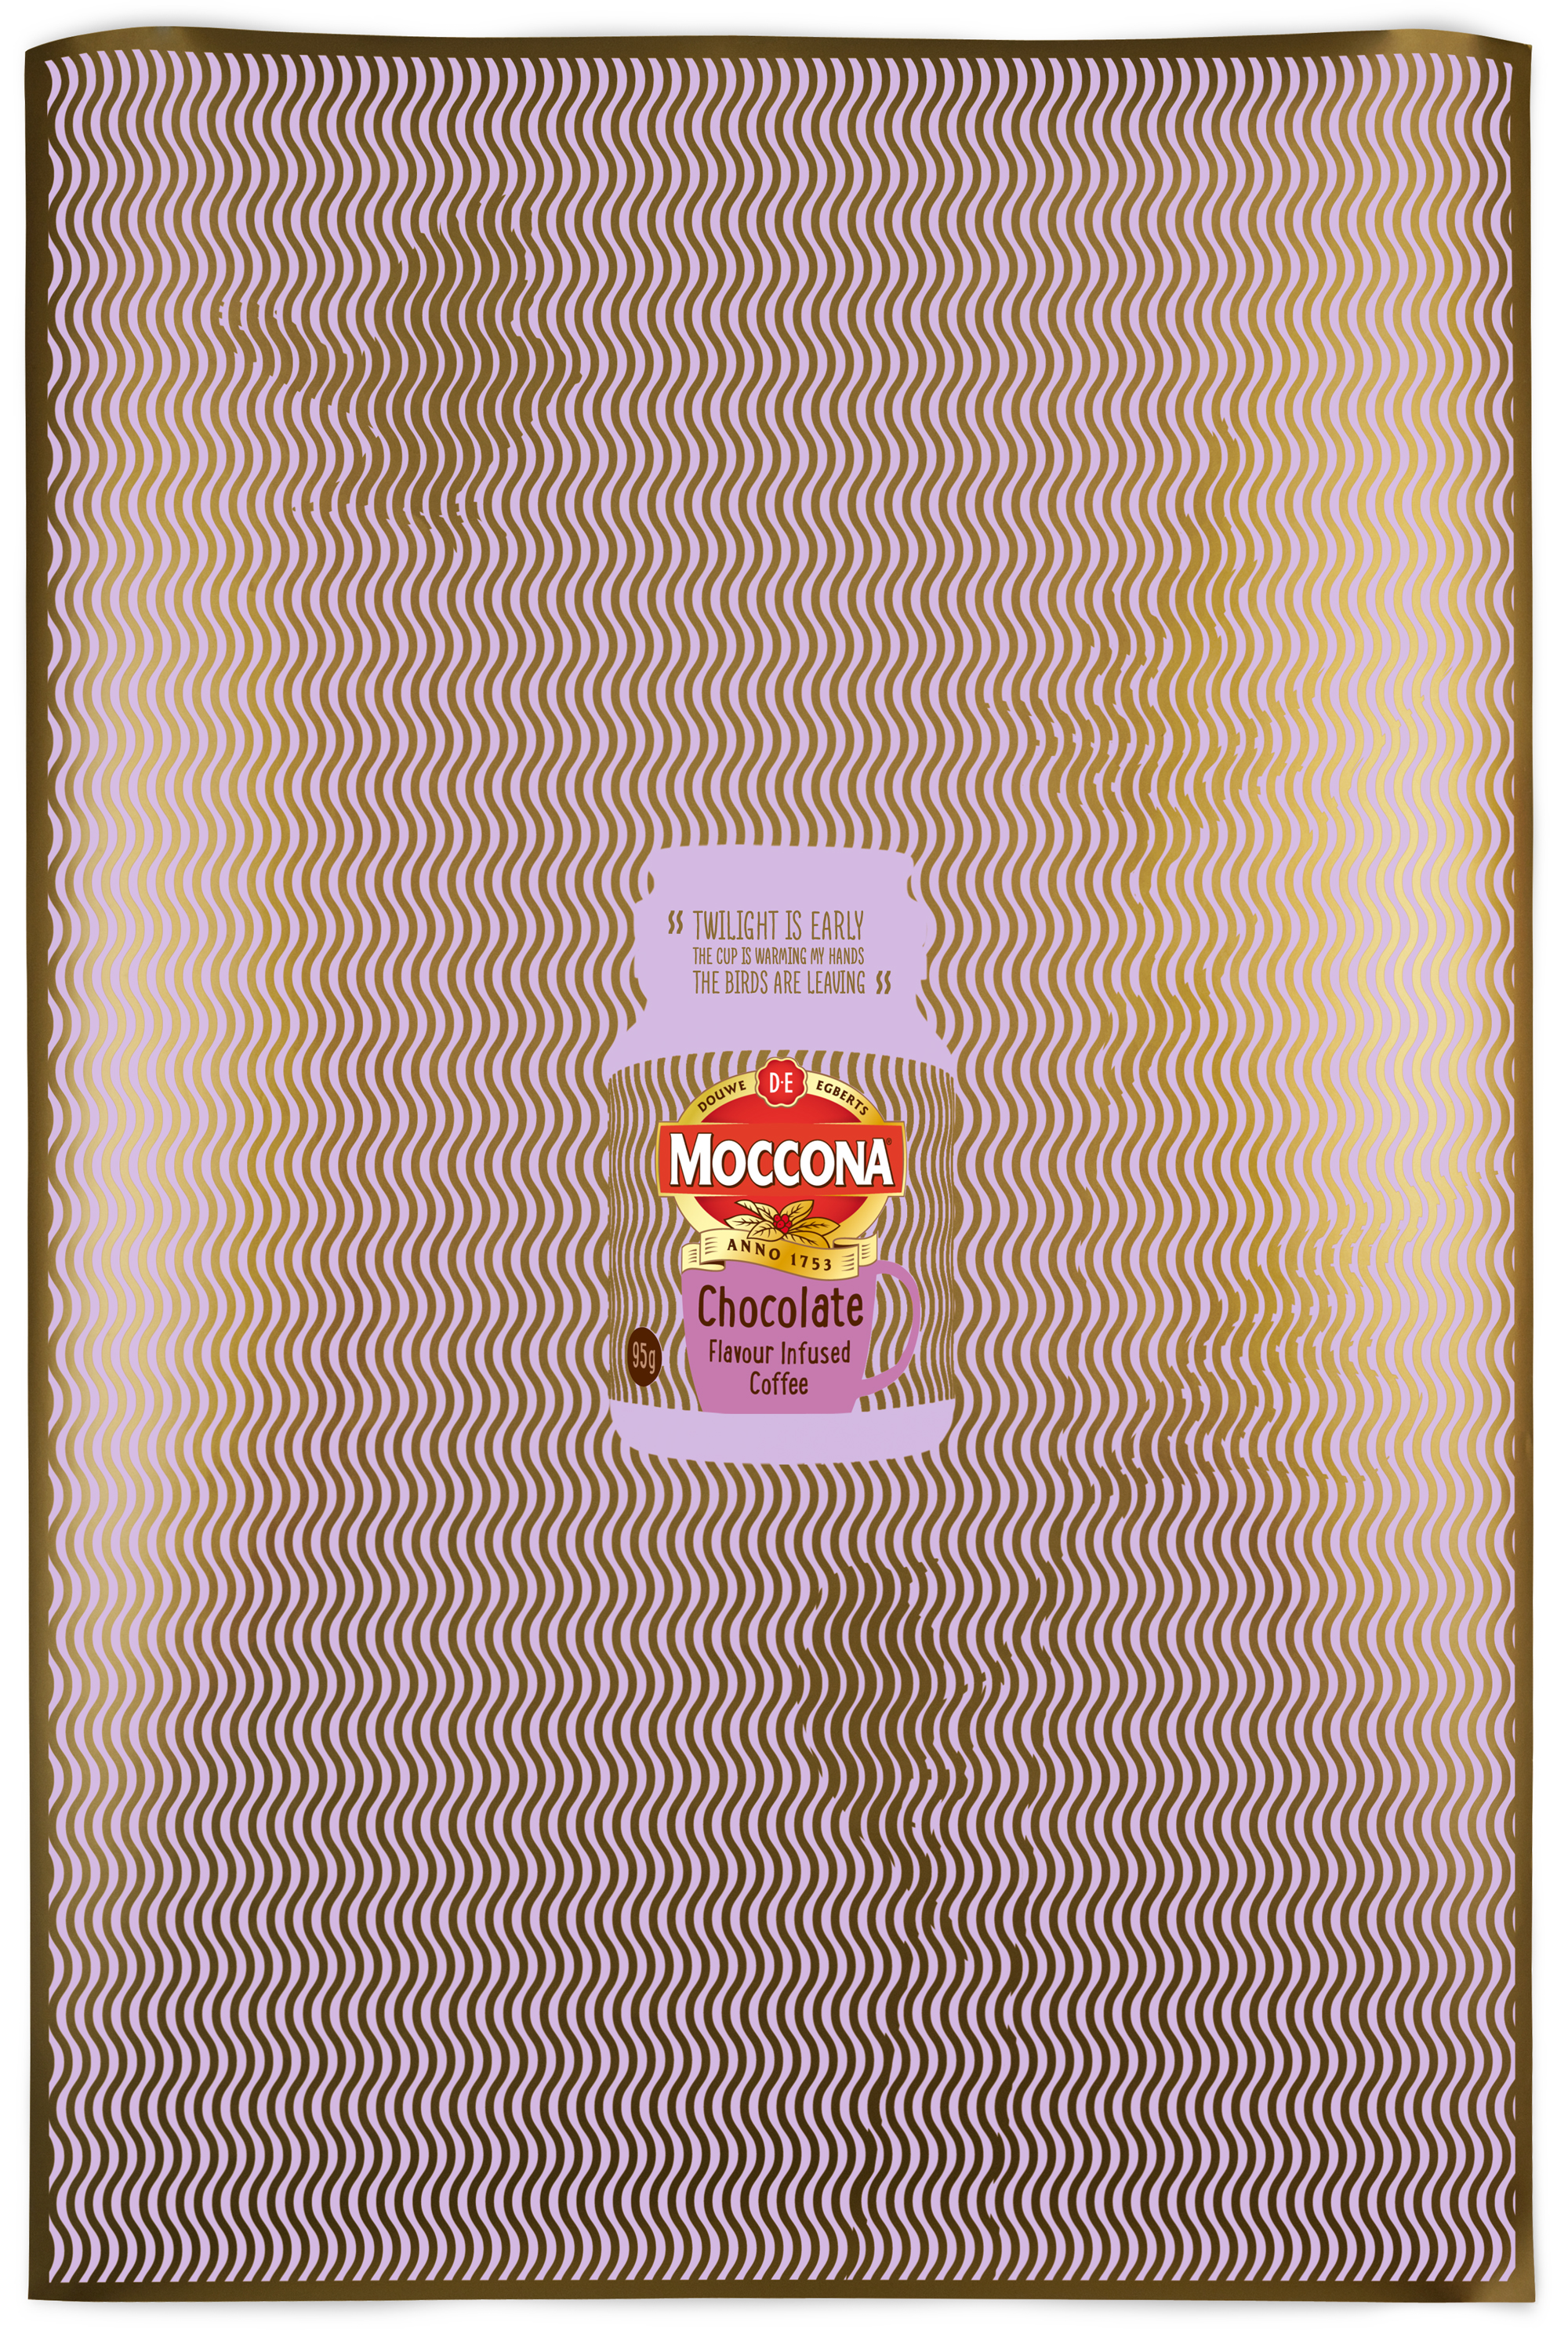 Moccona subtle posters, креатив, дизайн, реклама, продвижение бренда, брендинговое агентство Depot WPF